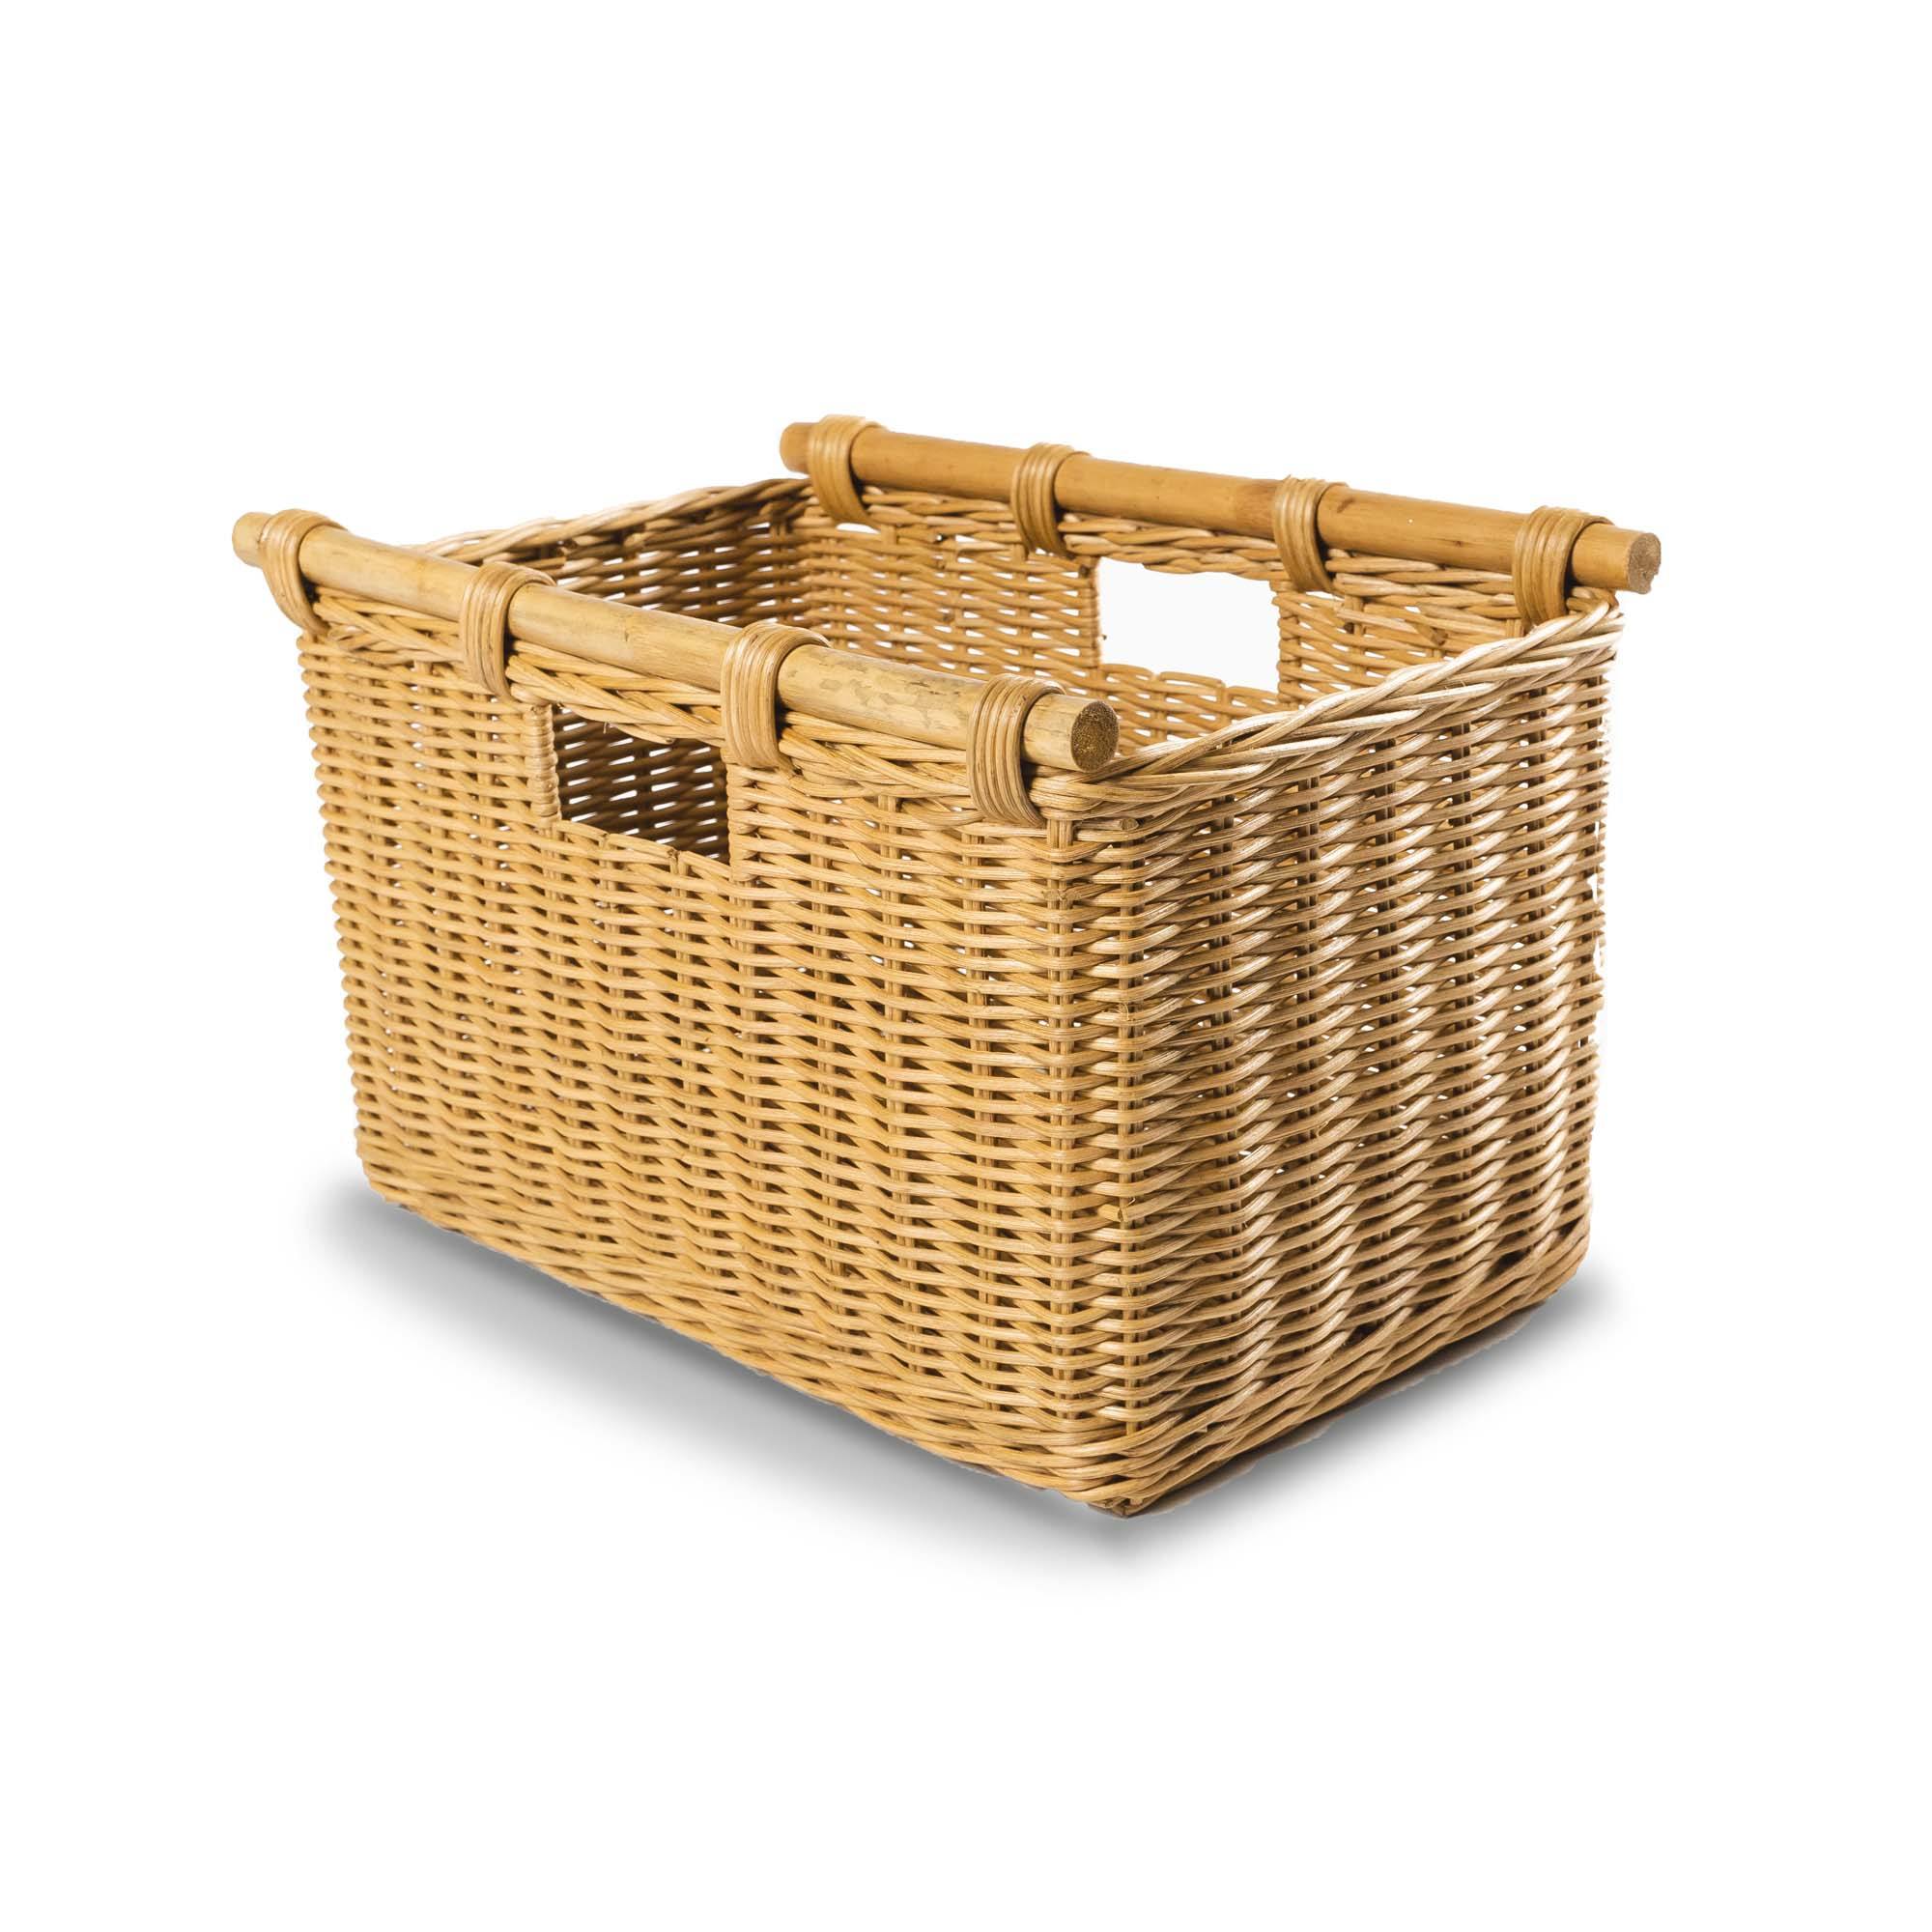 Tall Narrow Wicker Storage Basket - Sandstone - Medium